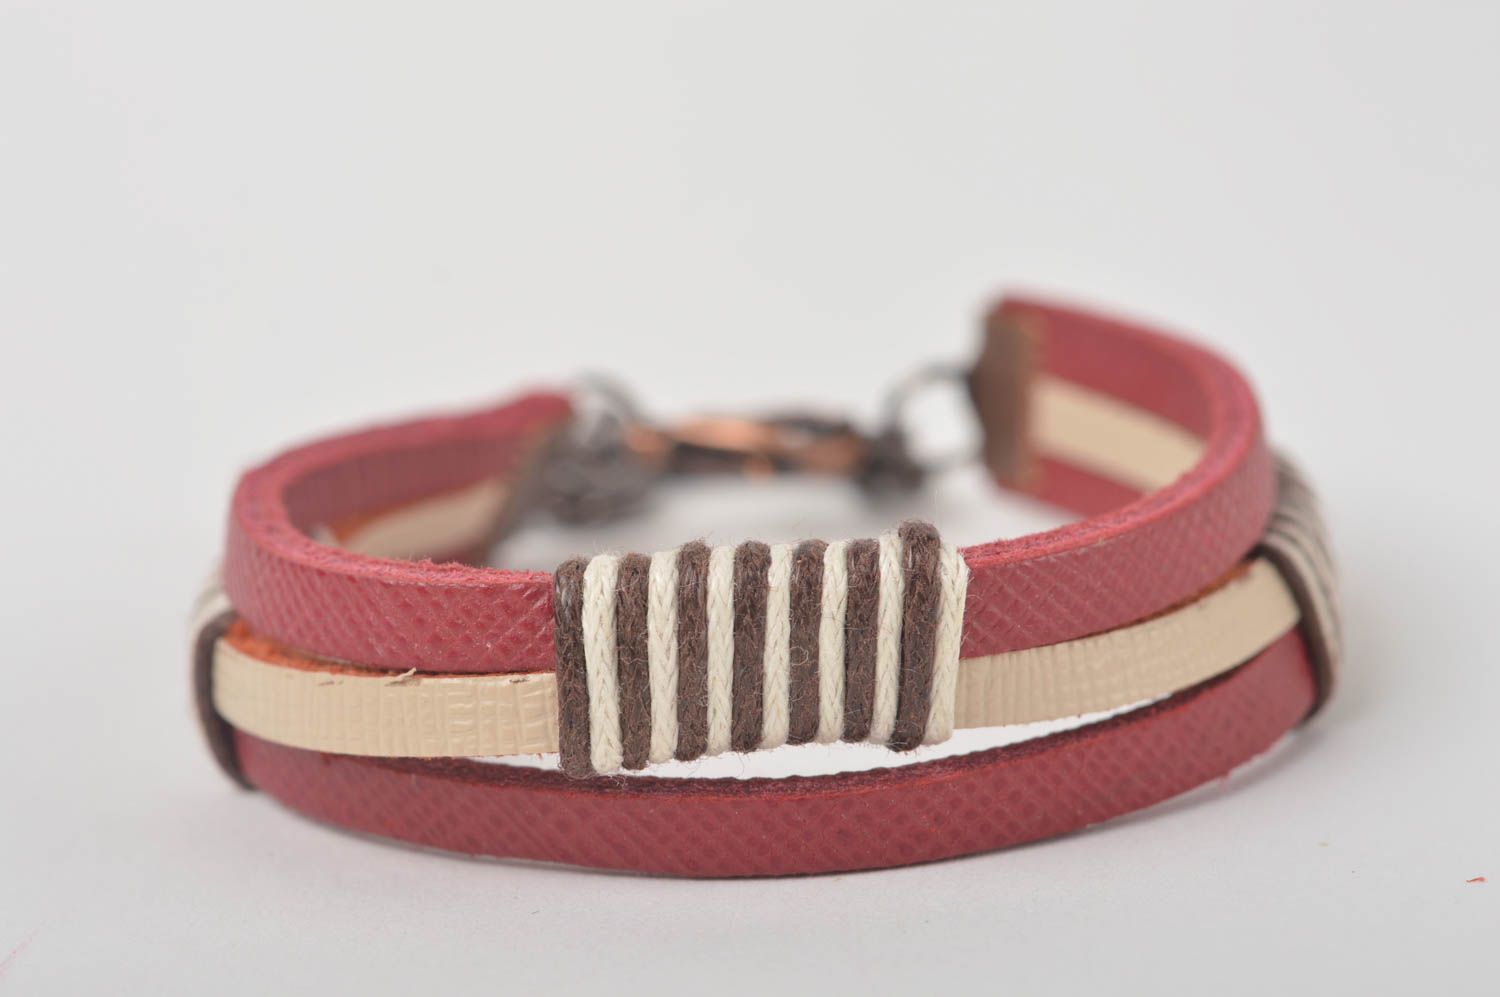 Stylish handmade leather bracelet leather goods wrist bracelet designs photo 4